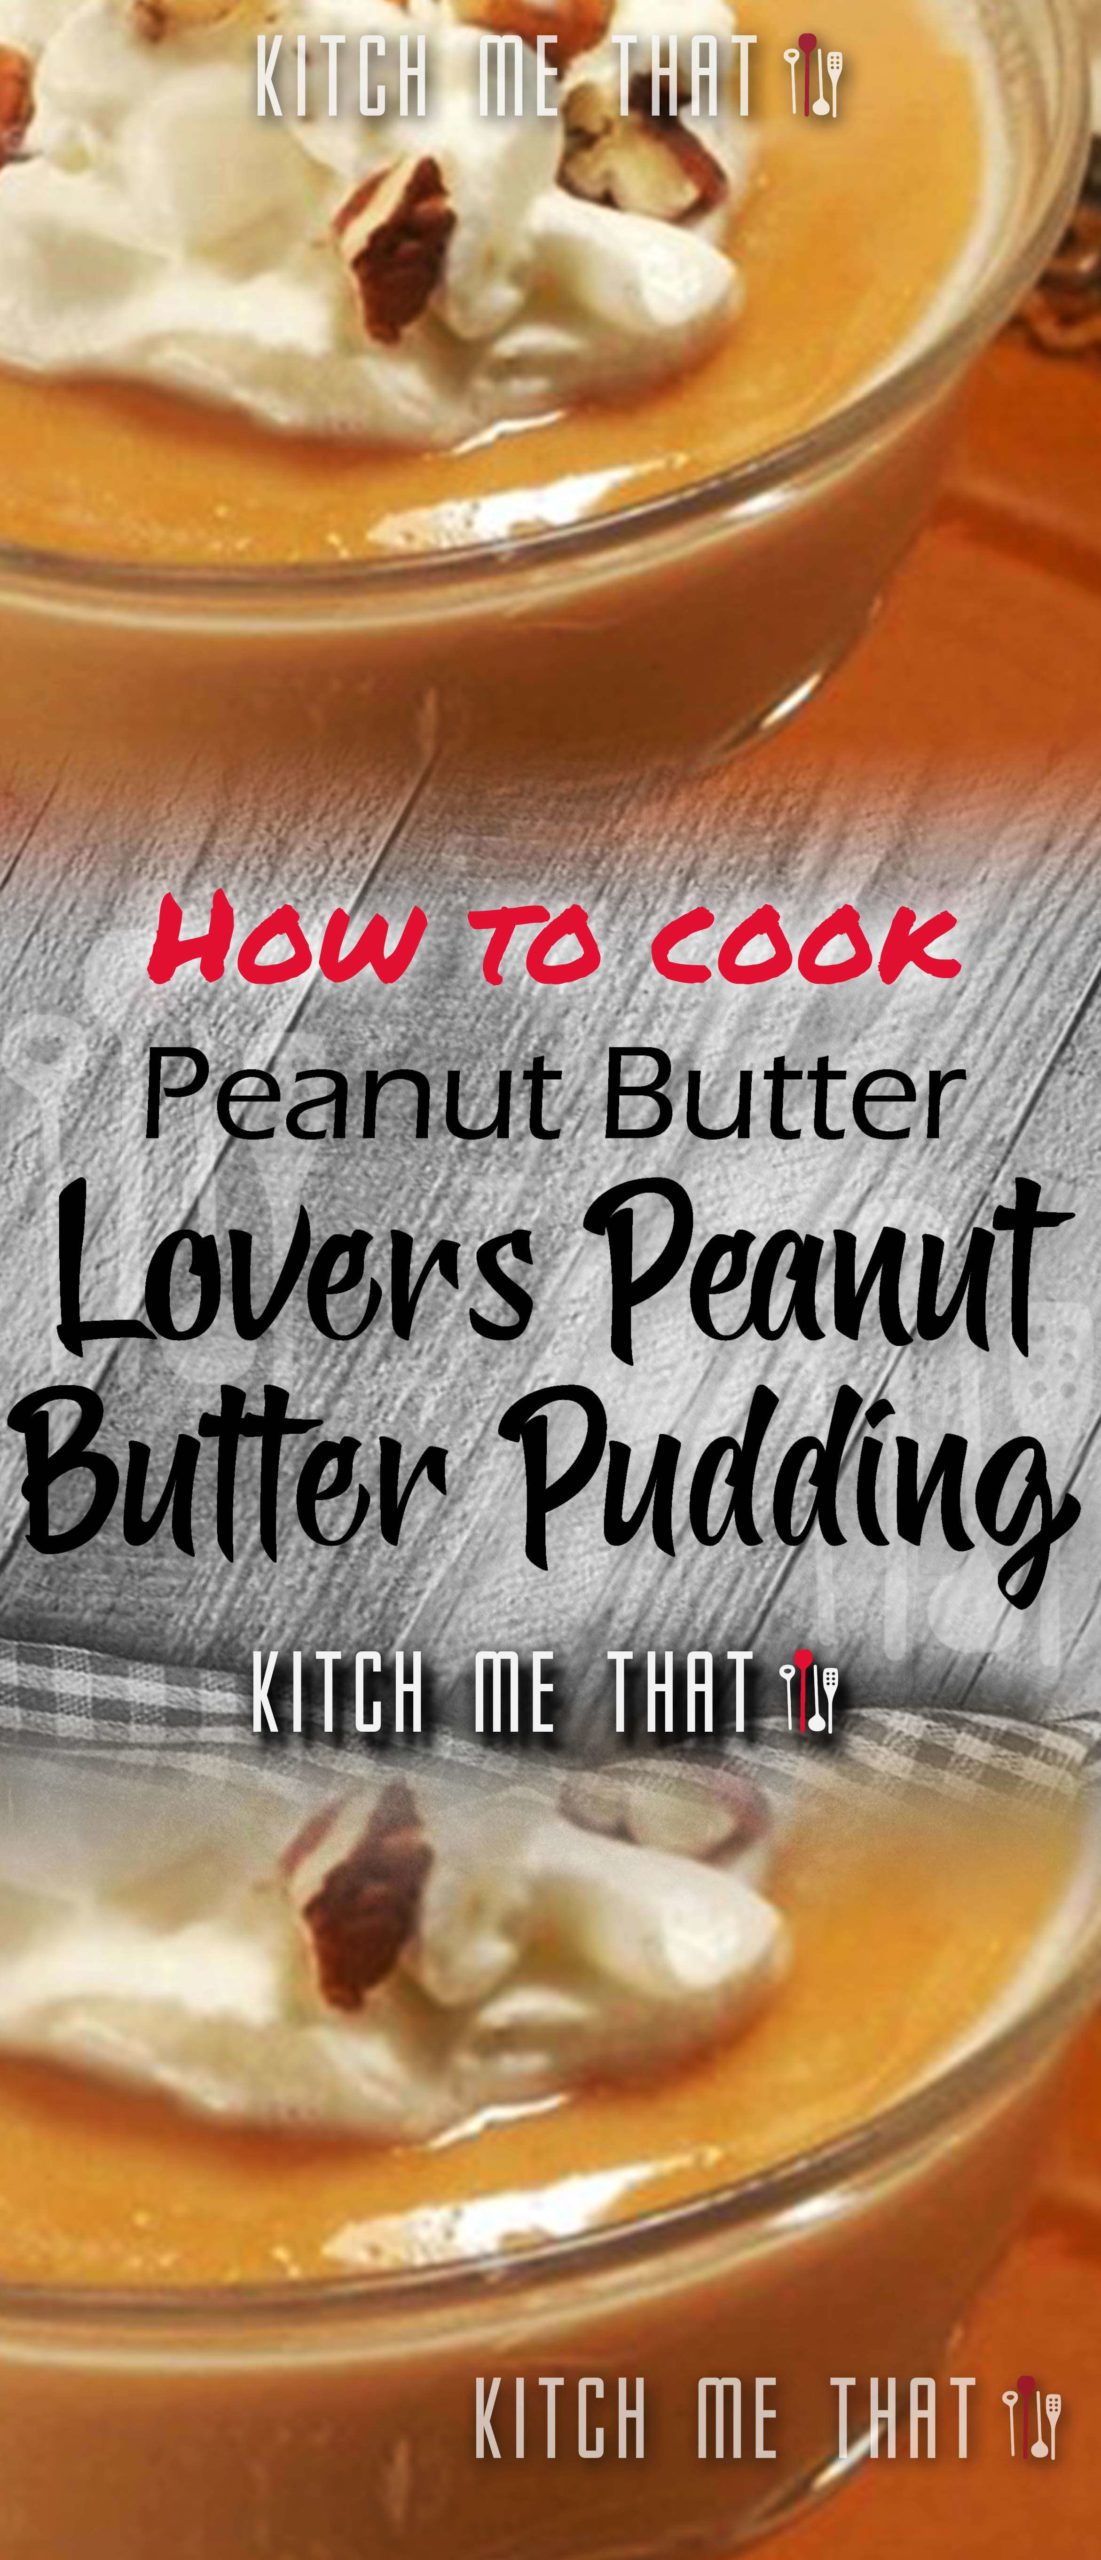 Peanut Butter Lover’S Peanut Butter Pudding !!